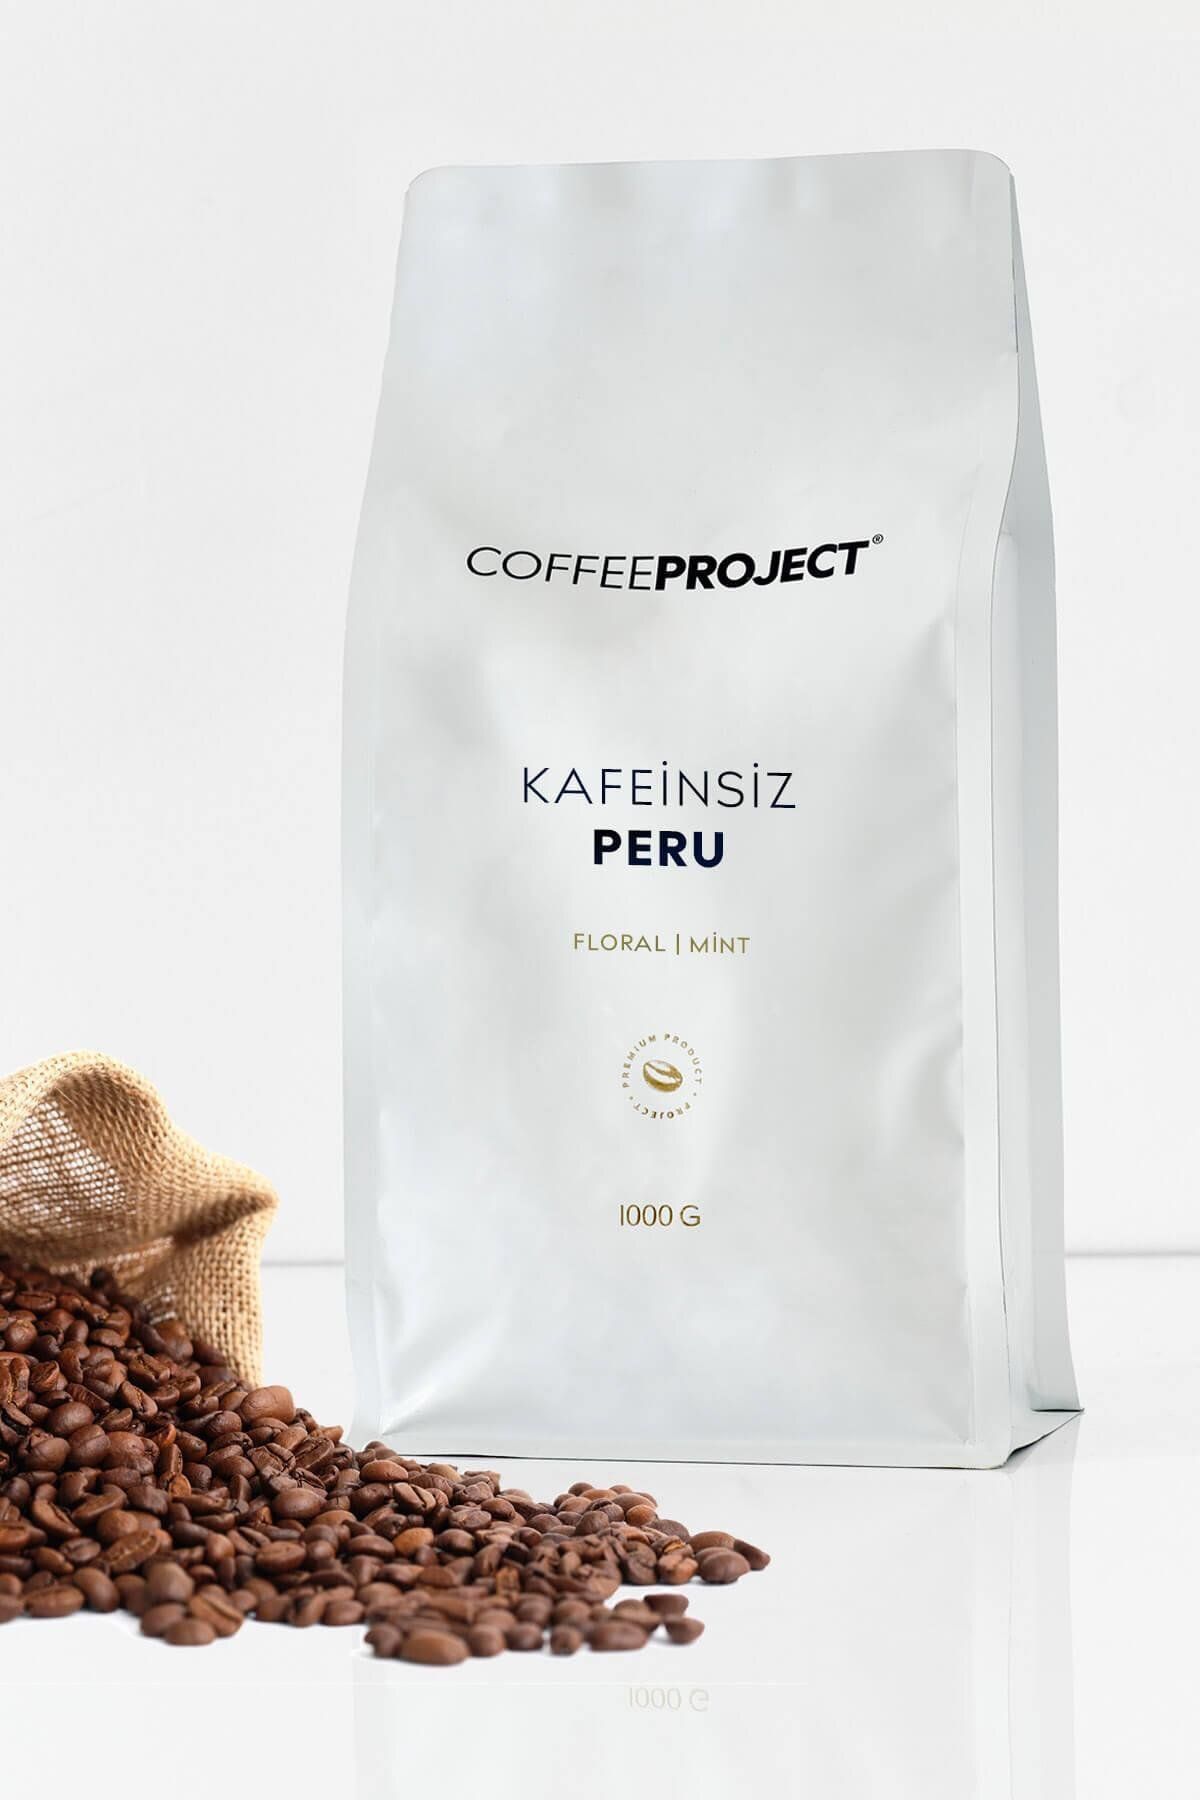 Coffee Project 1 Kg Peru - Kafeinsiz Filtre Kahve | Decaf